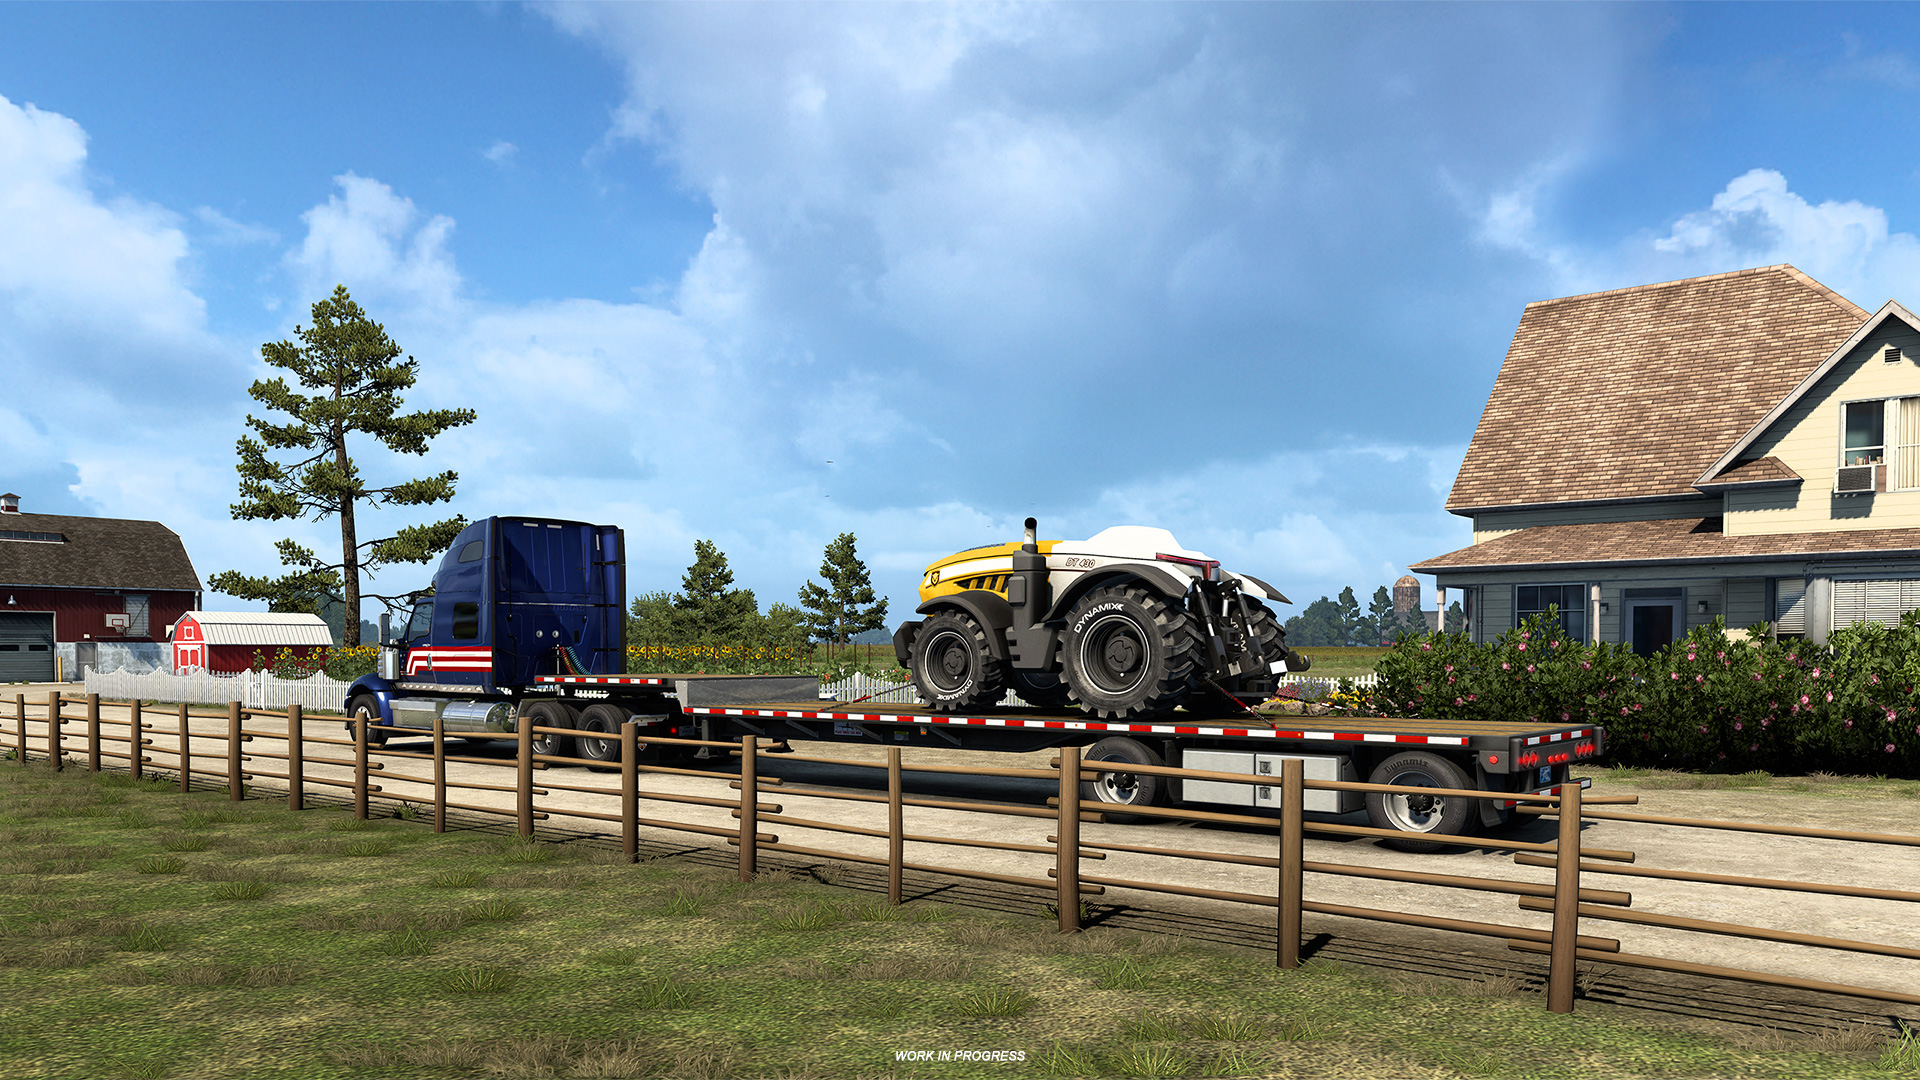 Farming Simulator 19 – Launch Trailer 